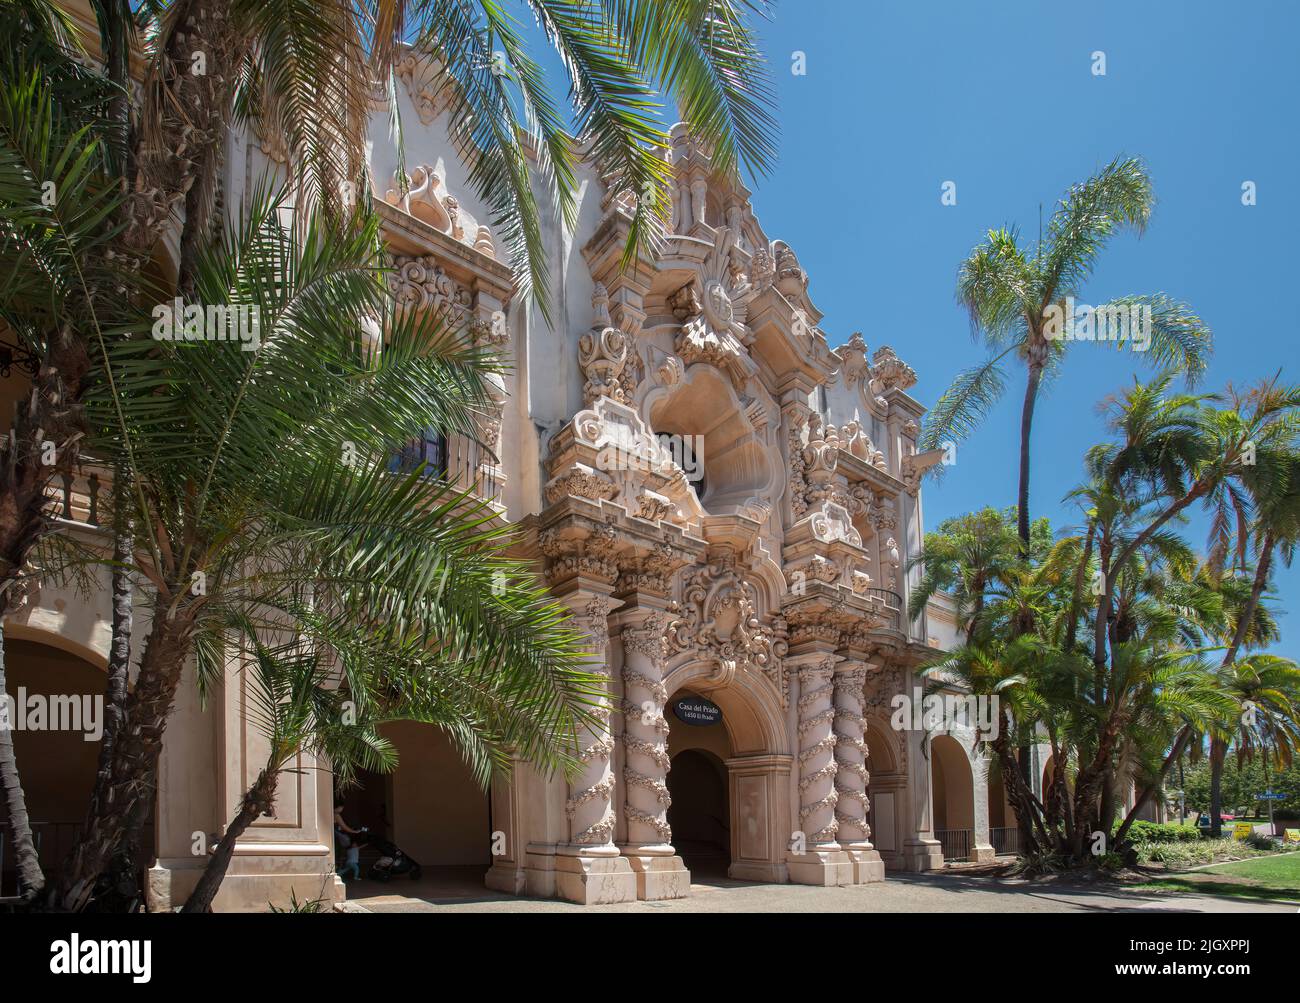 Casa Del Prado, Balboa Park, San Diego, CA Banque D'Images